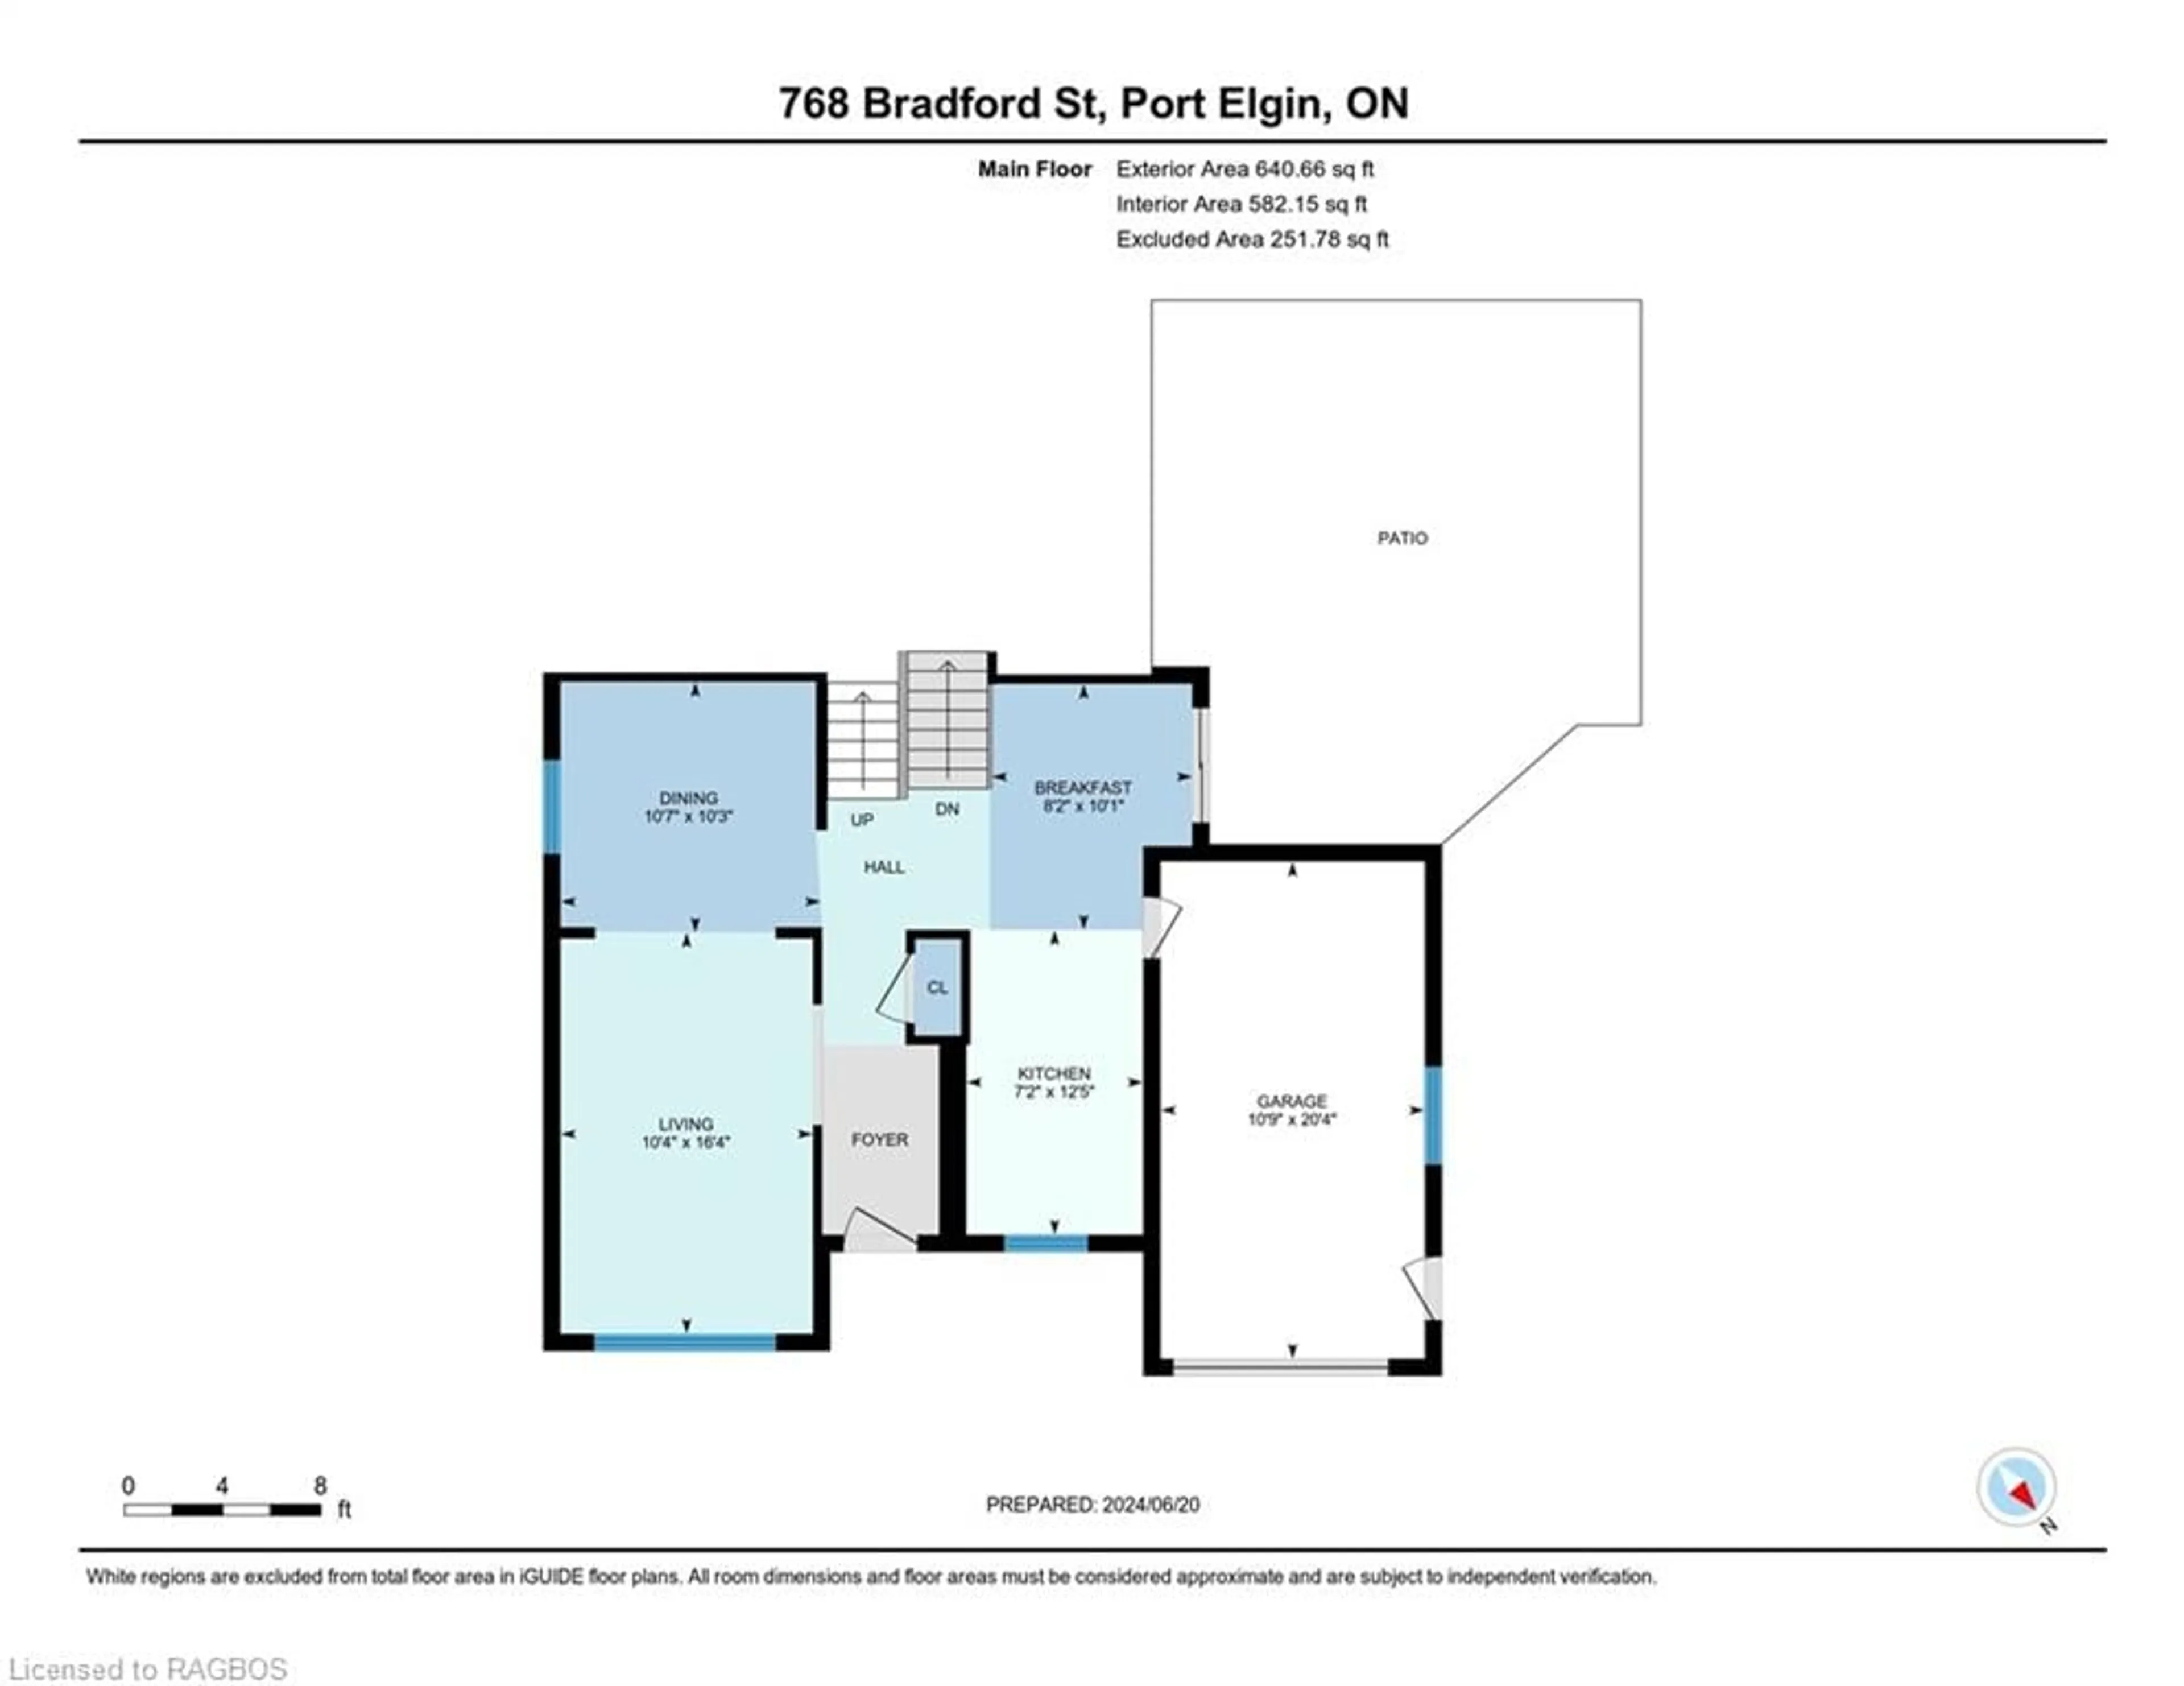 Floor plan for 768 Bradford Dr, Port Elgin Ontario N0H 2C4